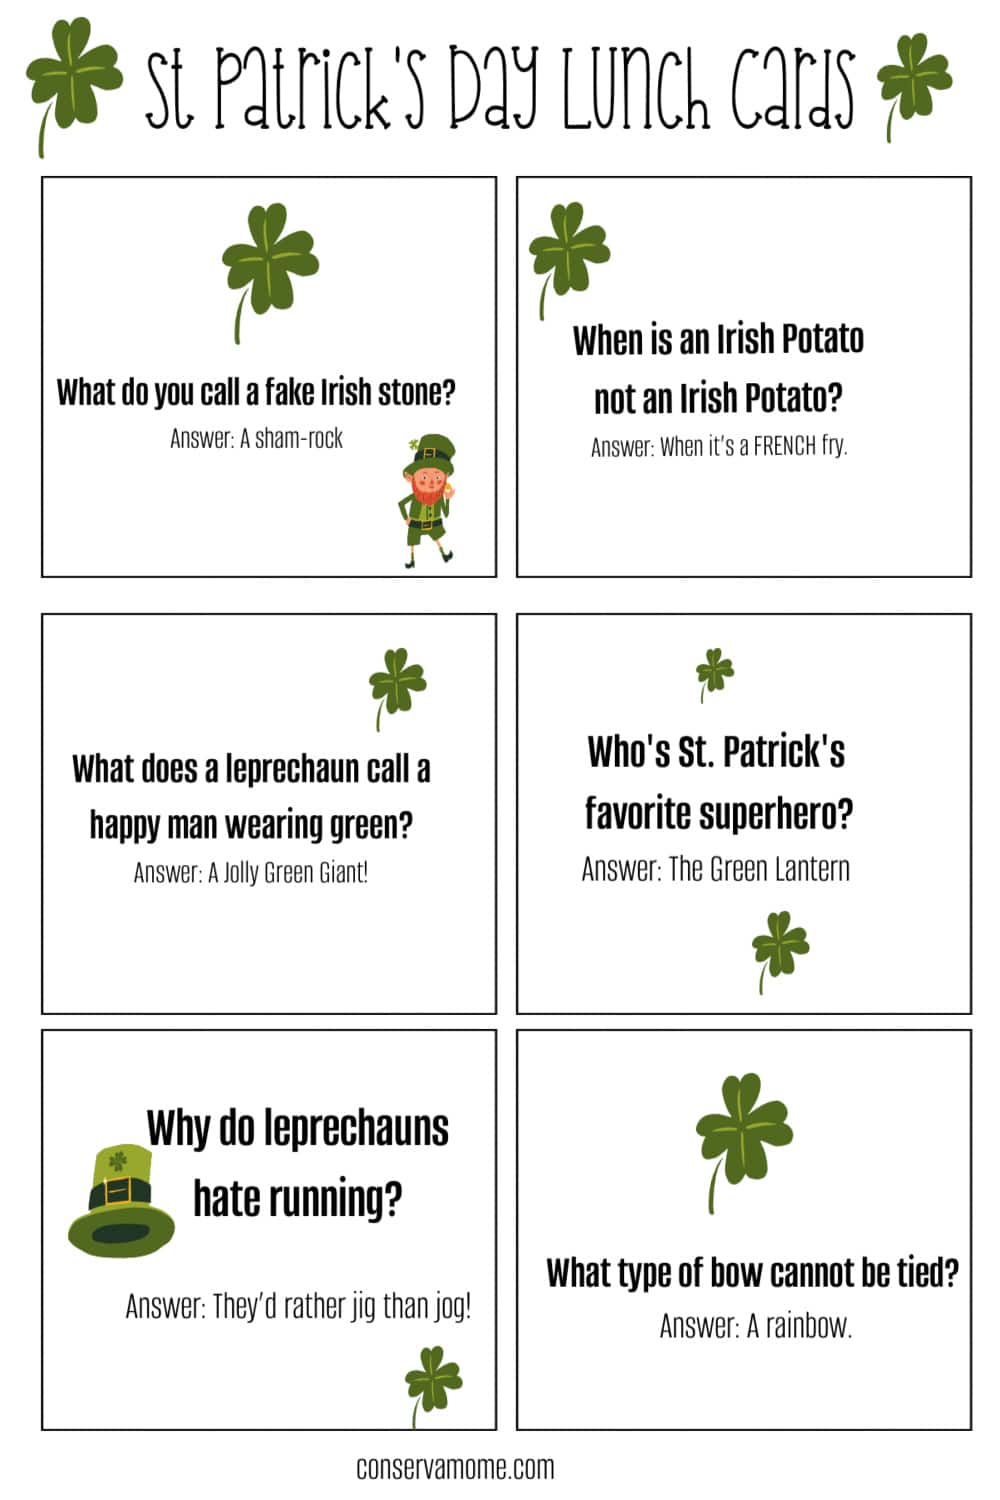 St patricks day jokes for kids lunchbox cards